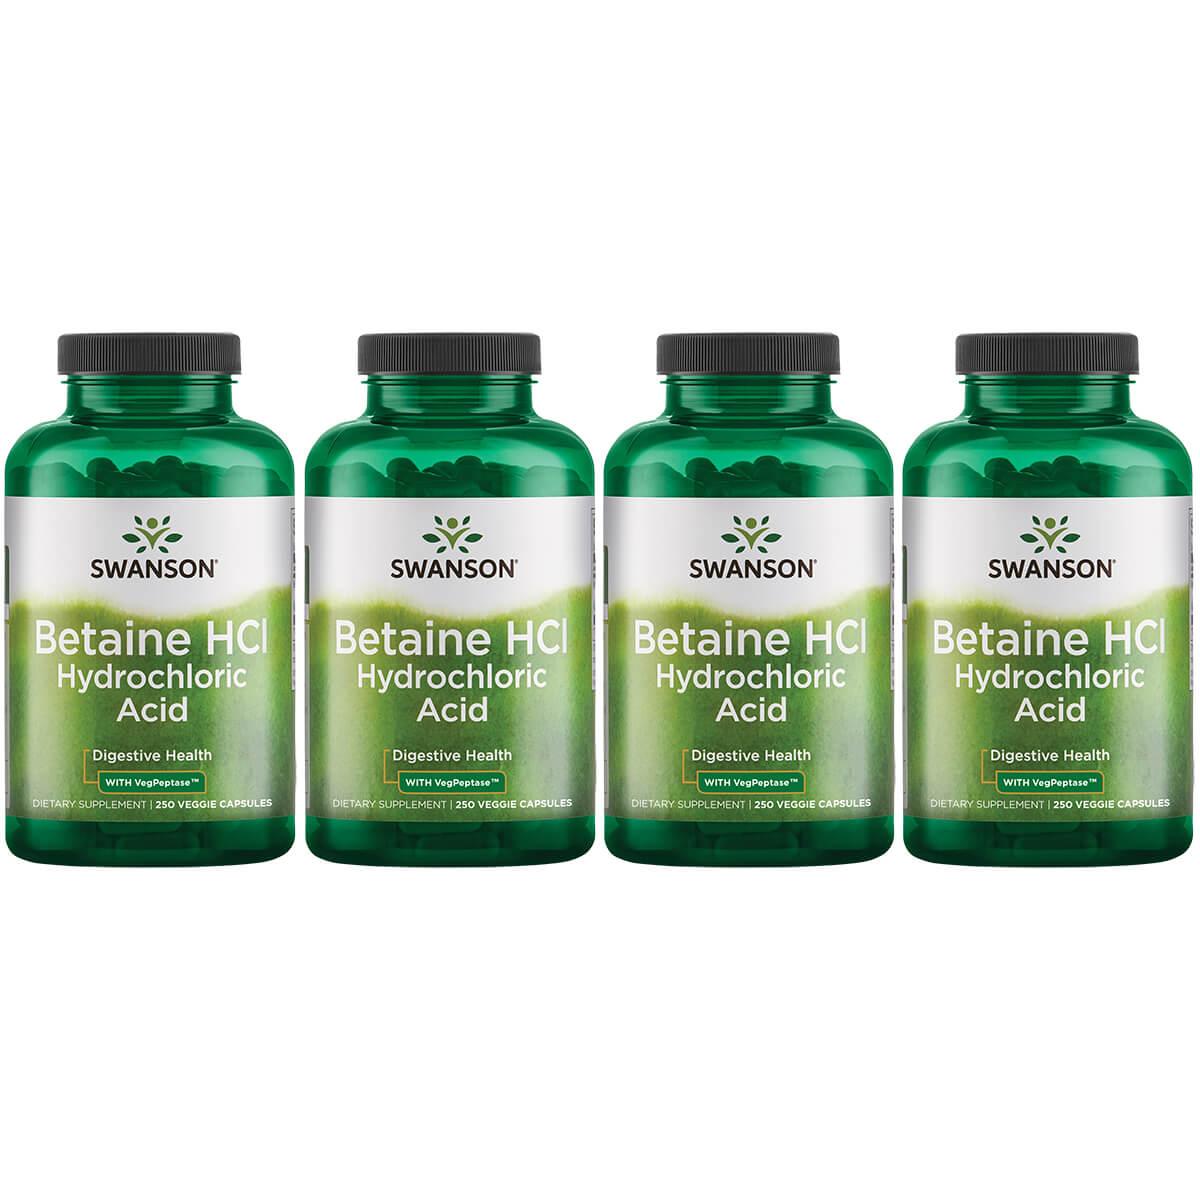 Swanson Premium Betaine Hcl Hydrochloric Acid with Vegpeptase 4 Pack Supplement Vitamin 250 Veg Caps